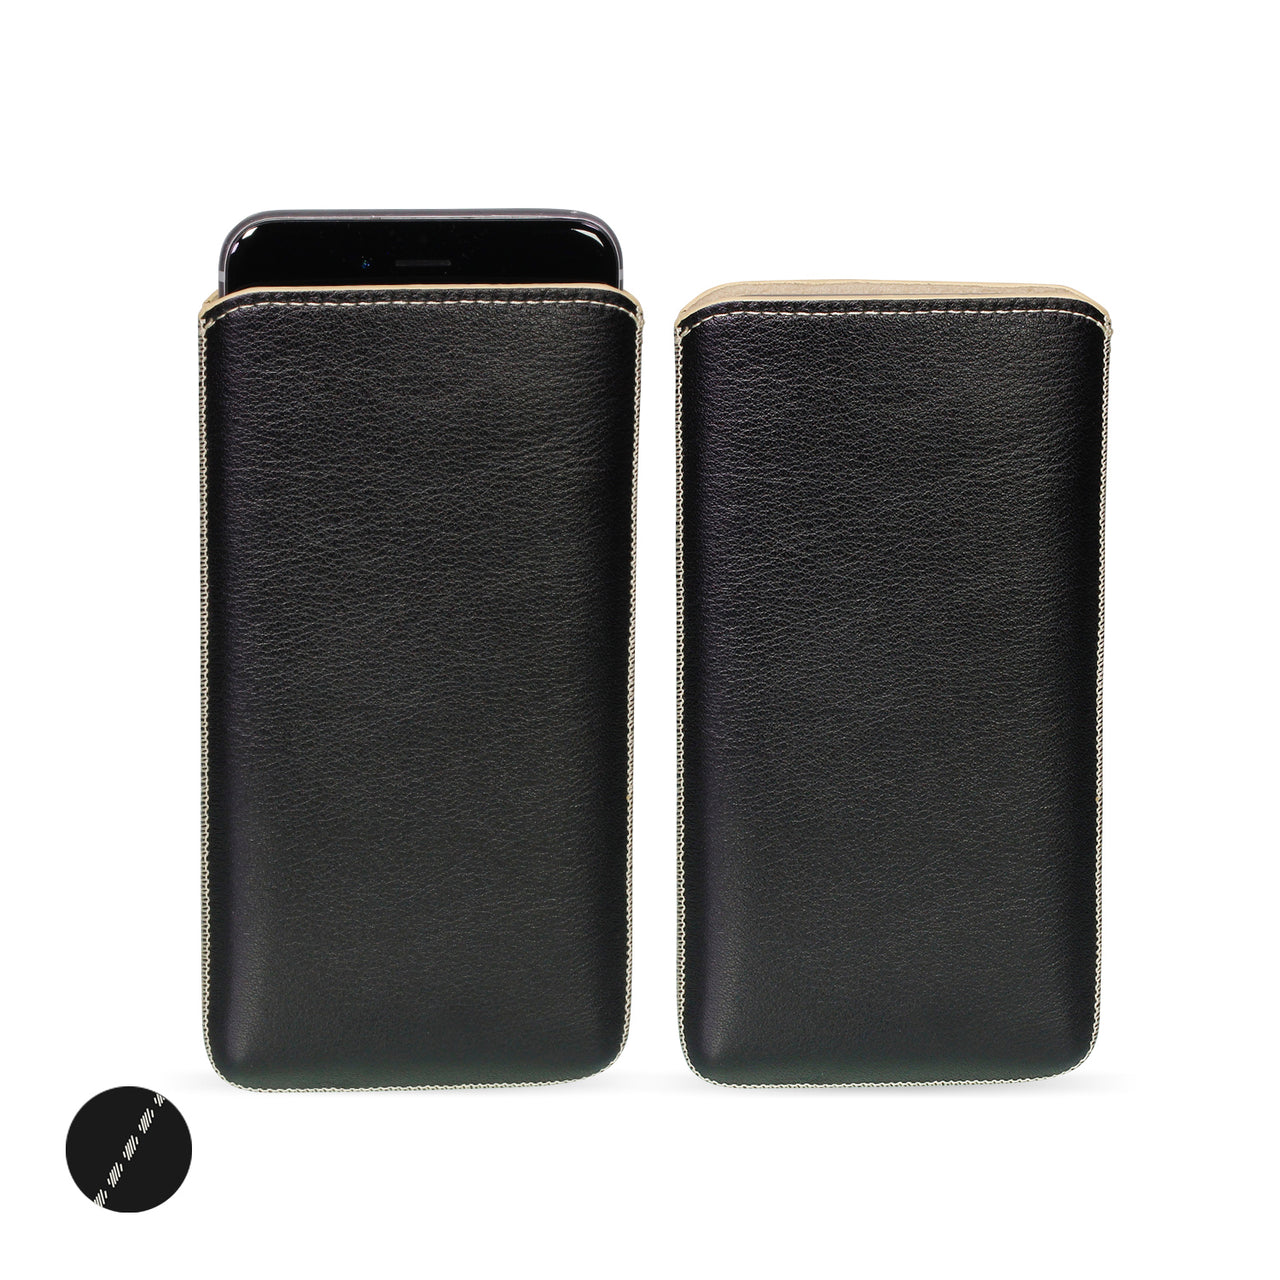 Google Pixel 3 XL Genuine Leather Pouch Sleeve Case | Artisanpouch